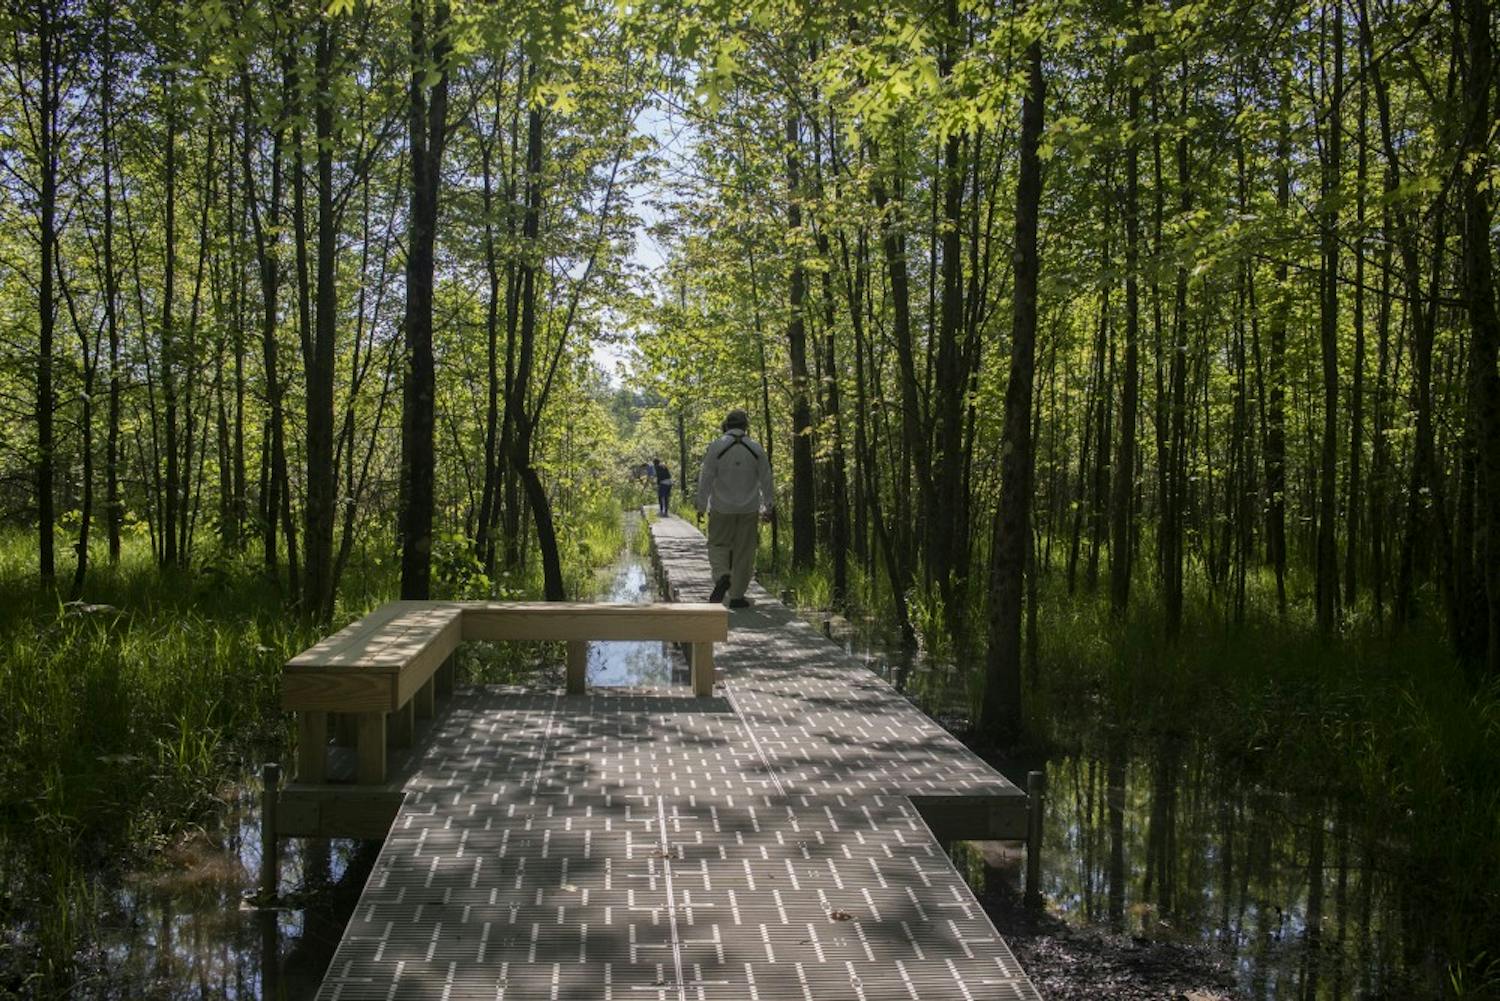 GALLERY: New boardwalk for Beanblossom Bottoms Nature Preserve